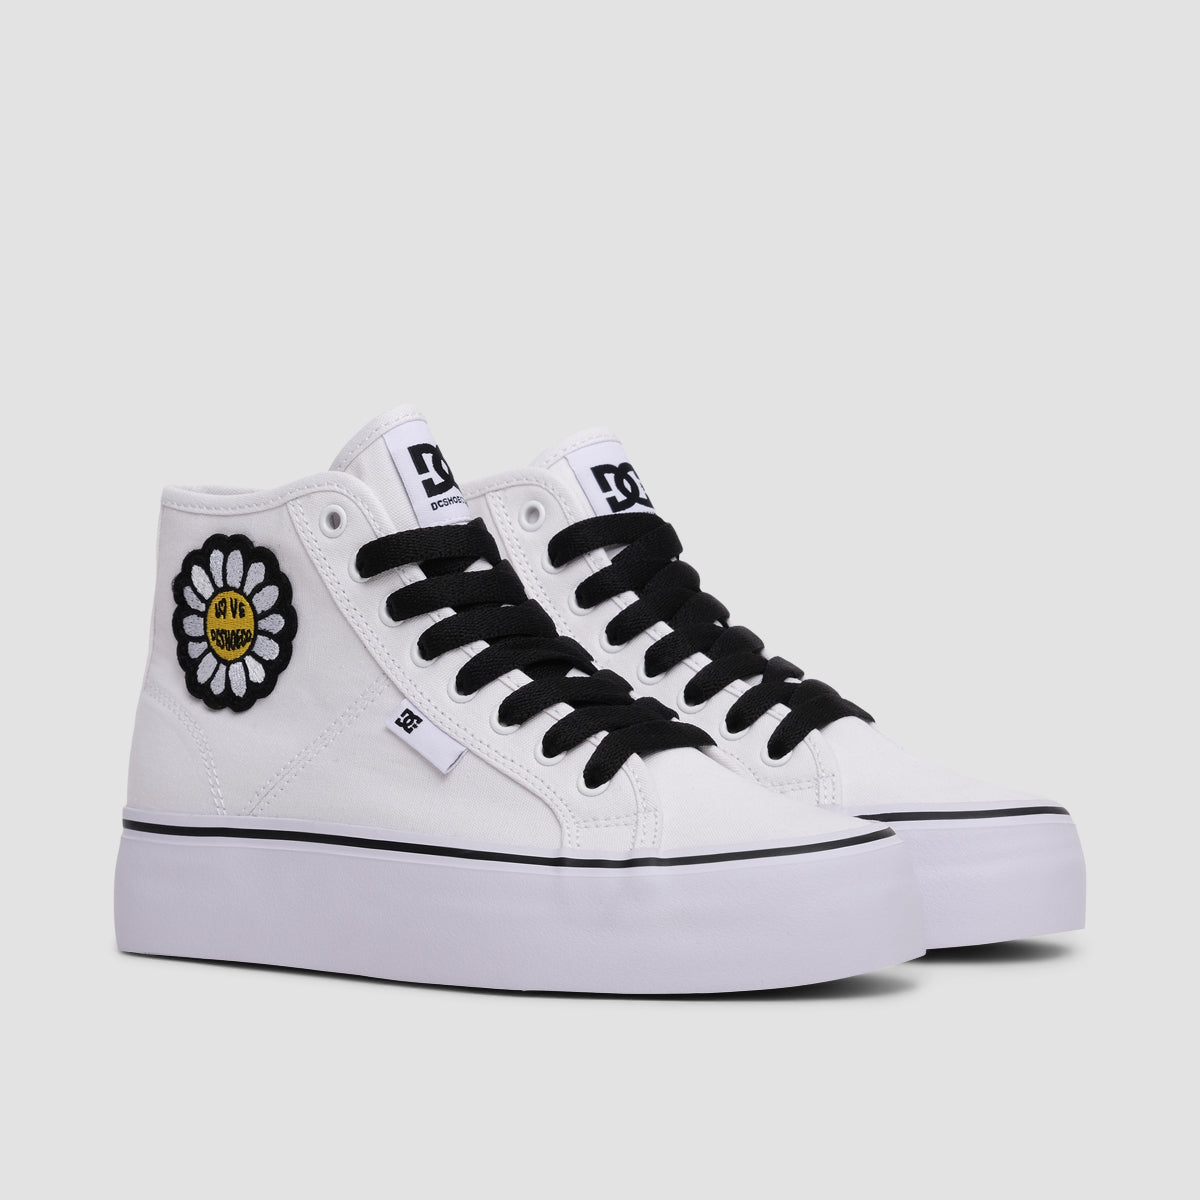 DC Manual Hi Platform Shoes - White/Black/Flower - Womens